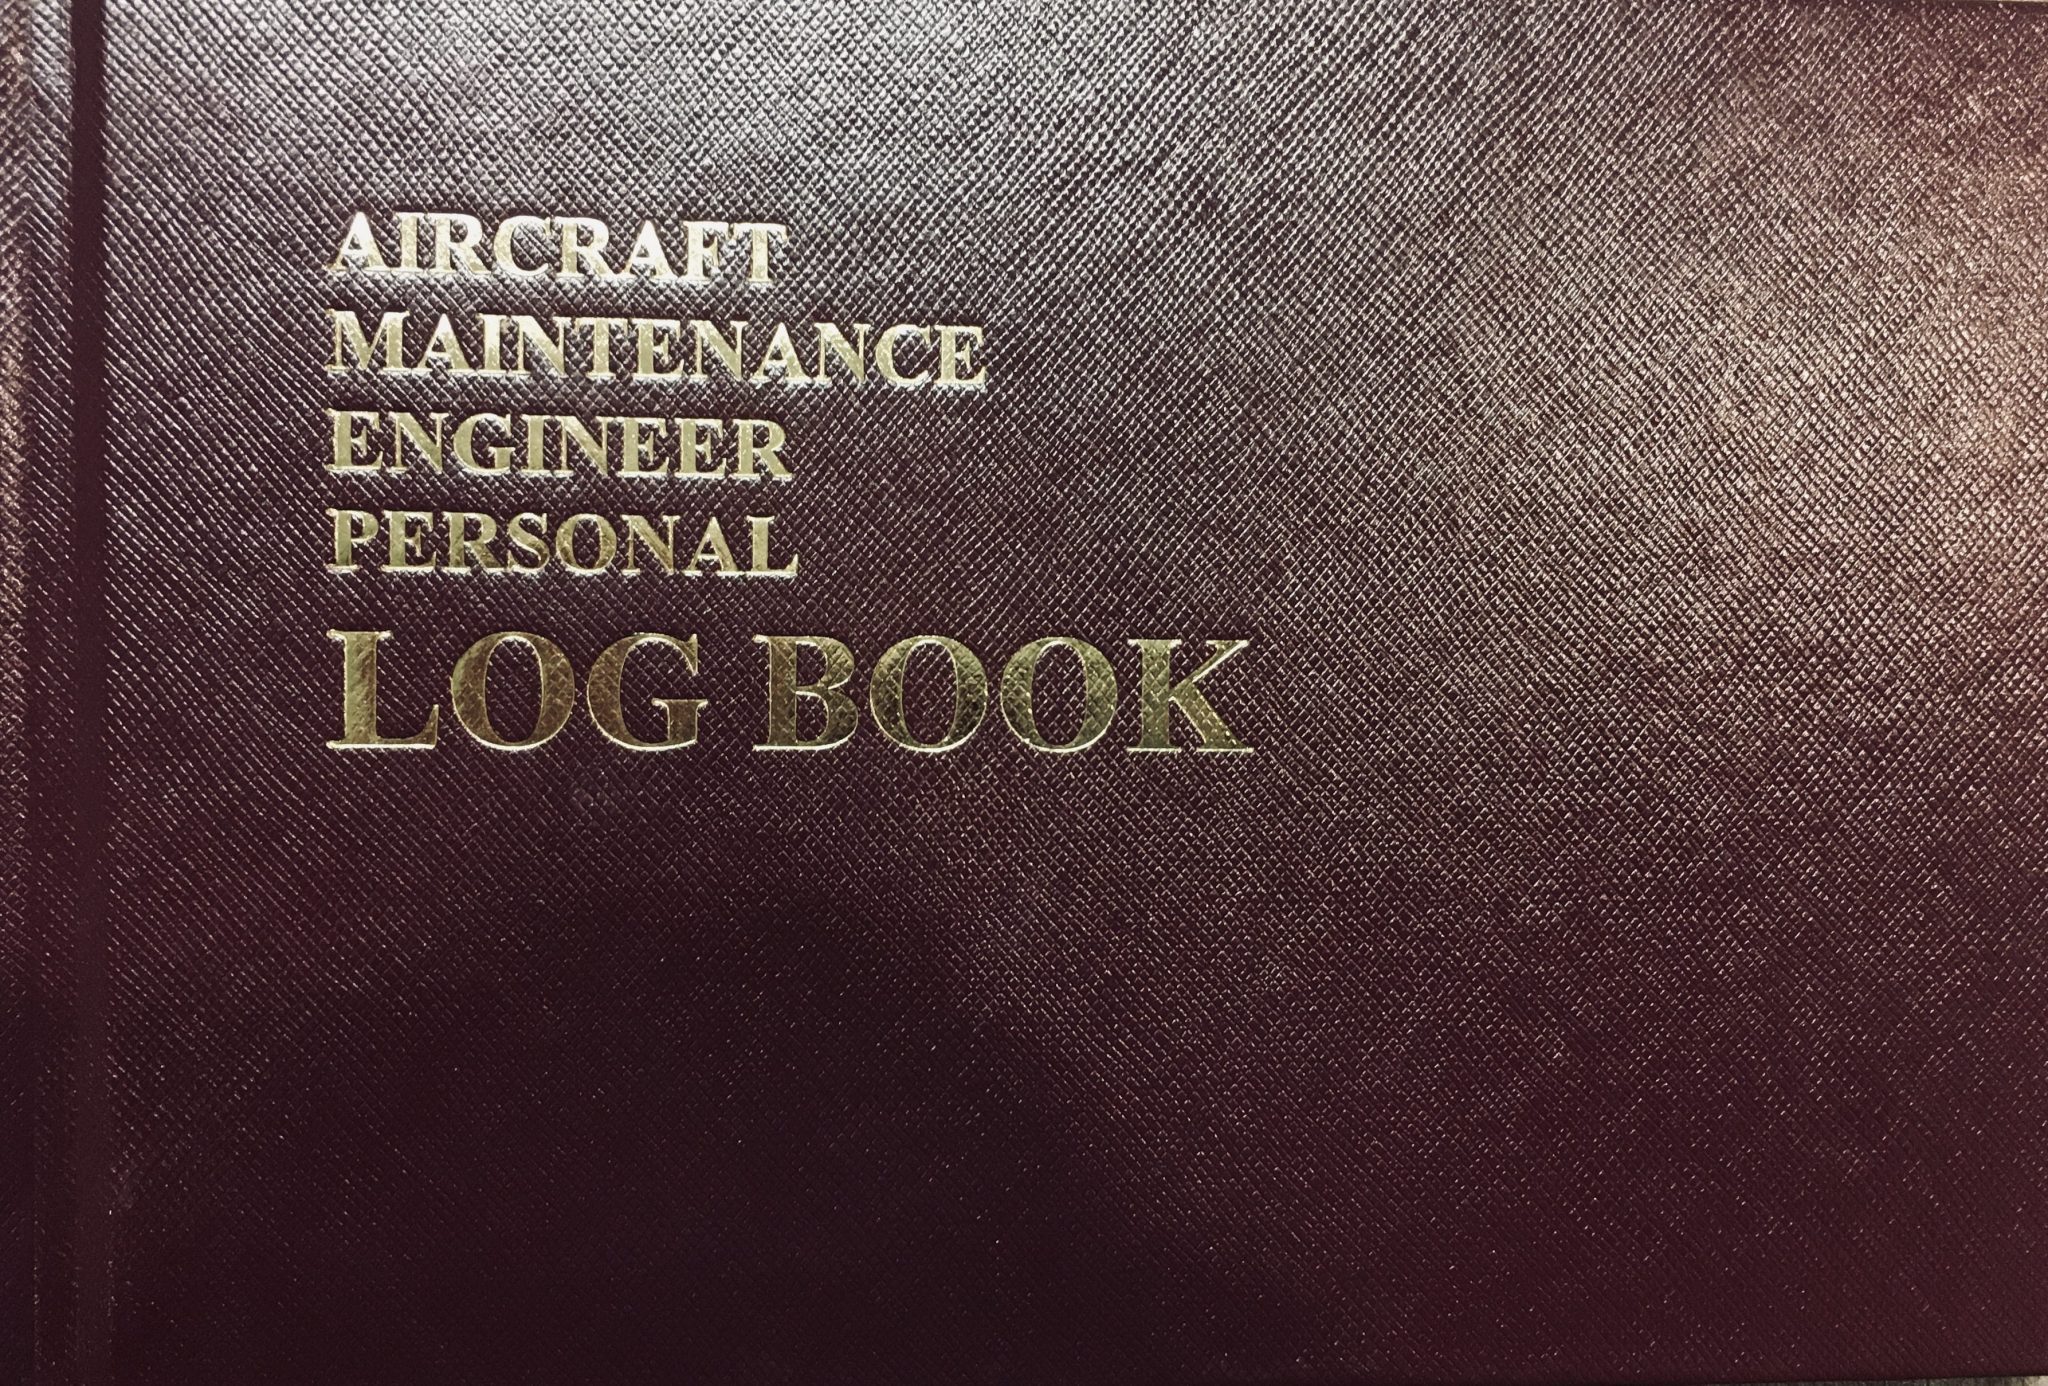 Aircraft Maintenance Engineer Personal Log Book